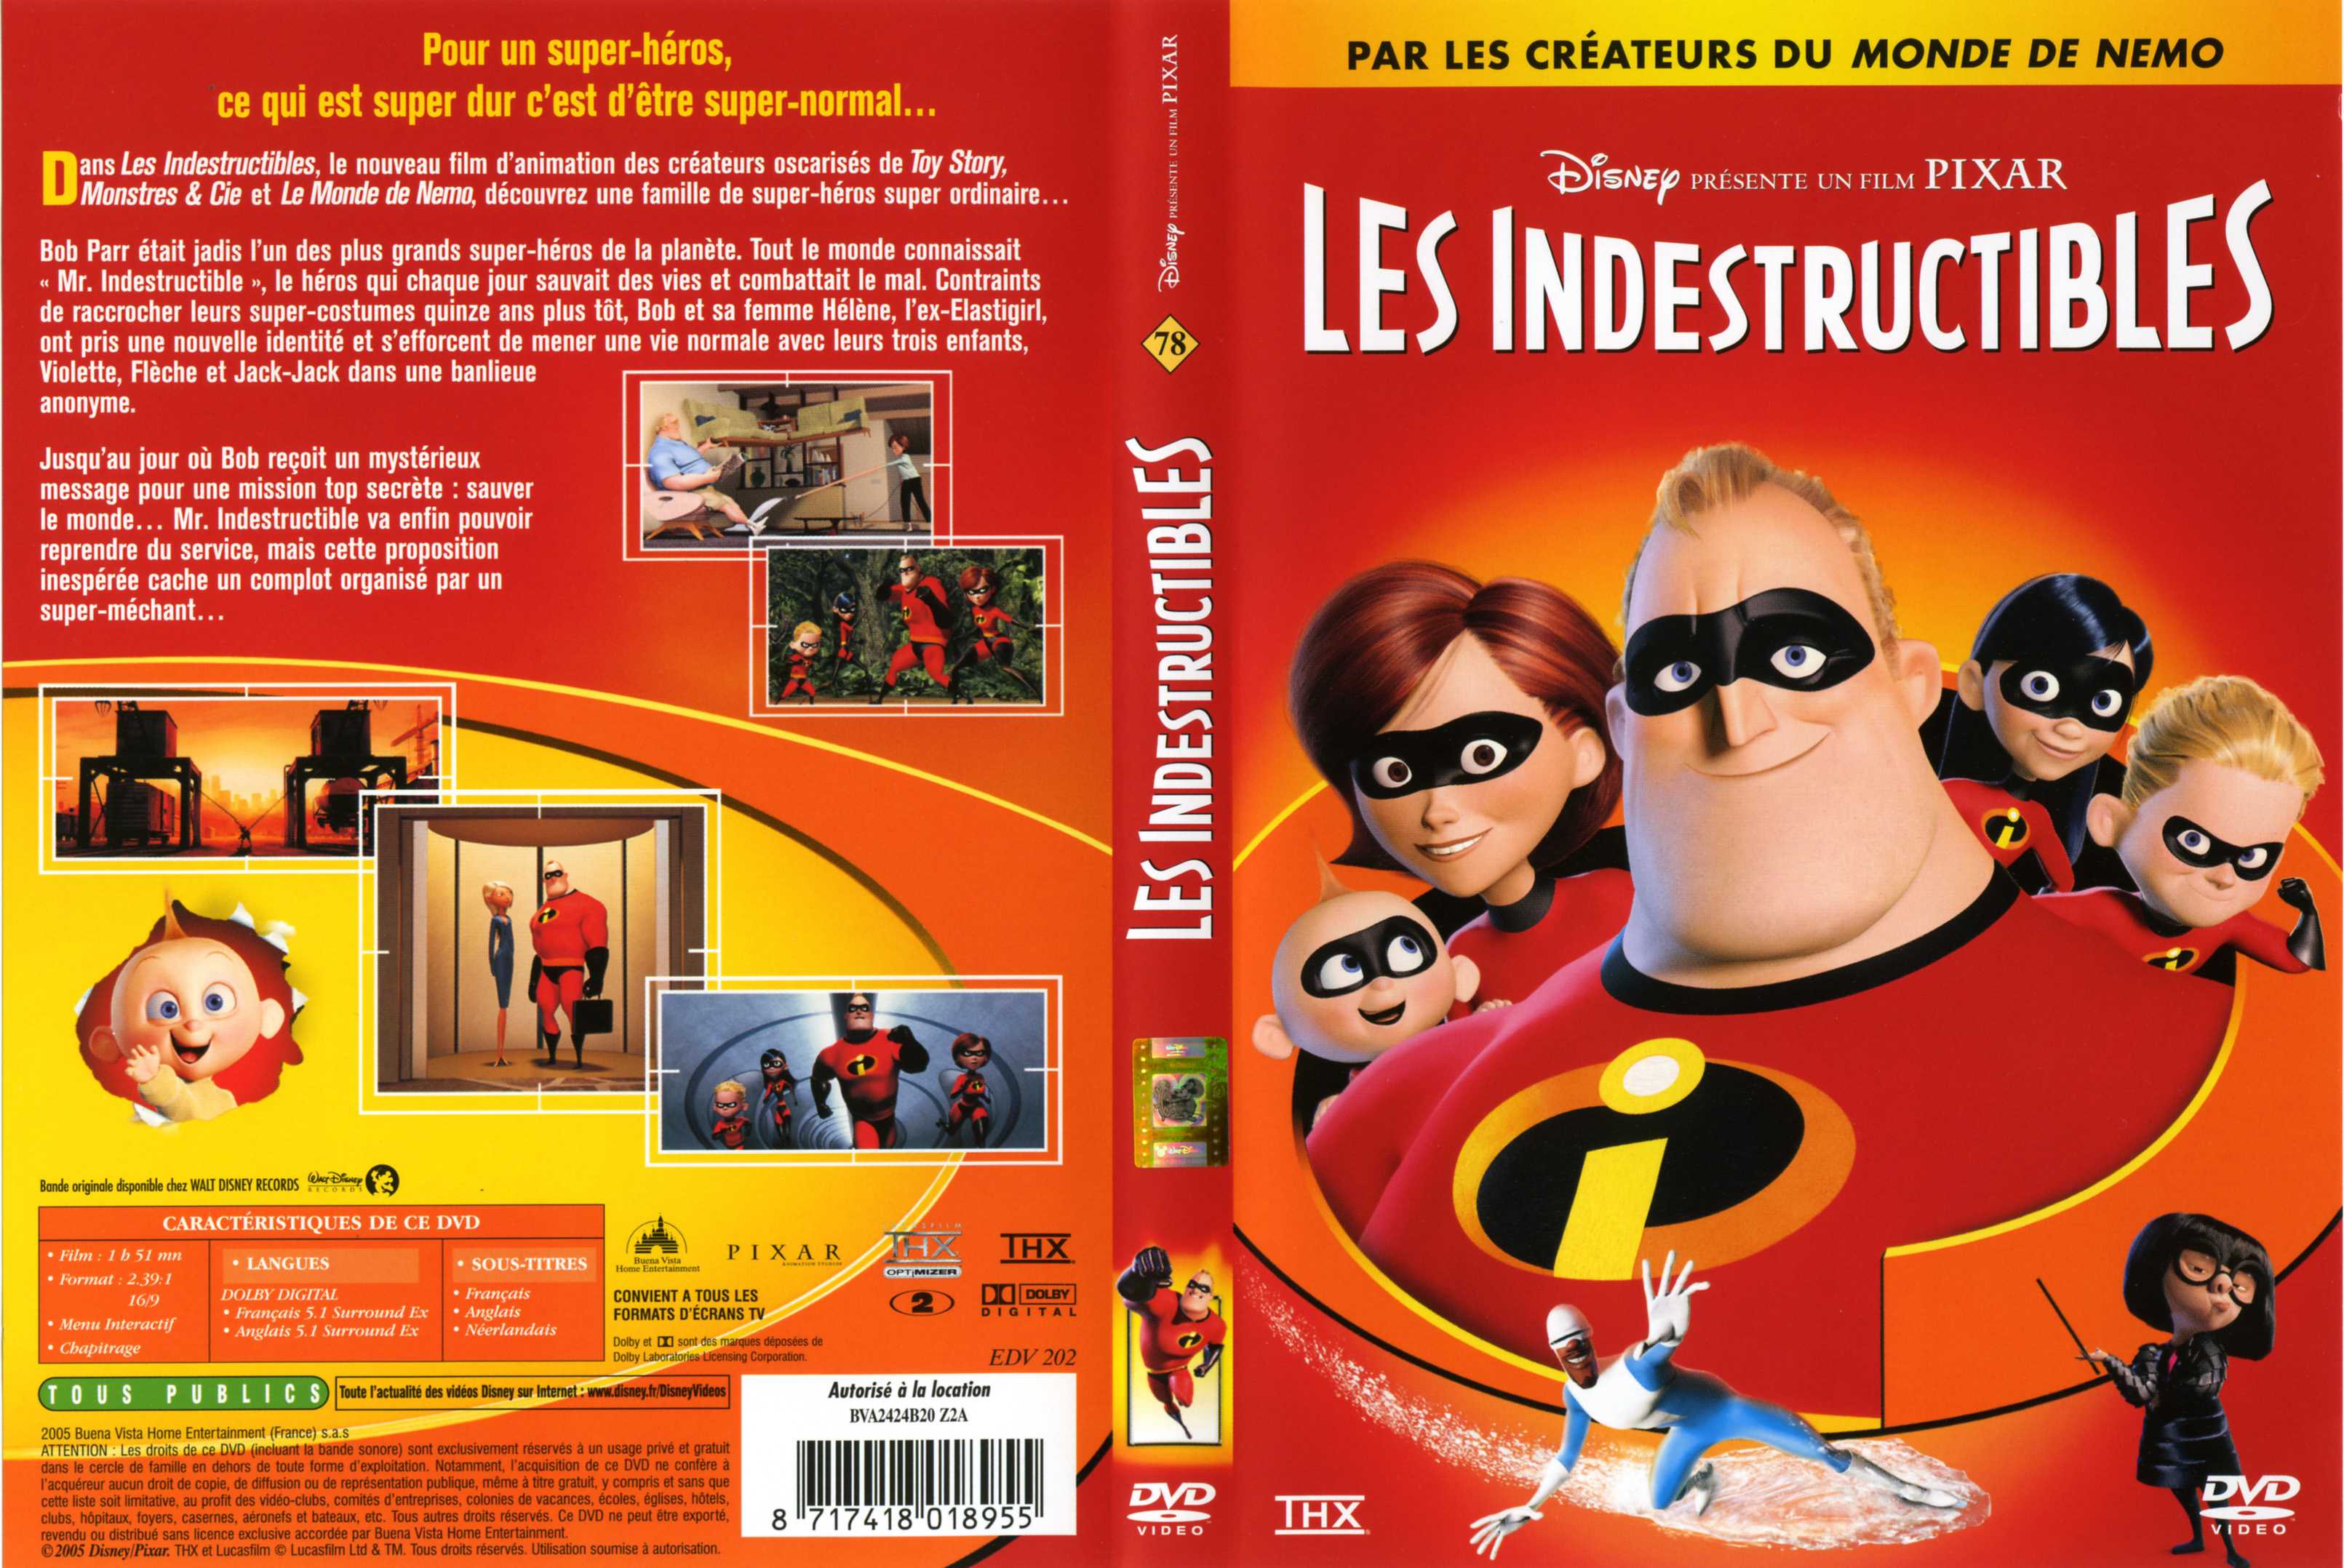 Jaquette DVD Les indestructibles v2